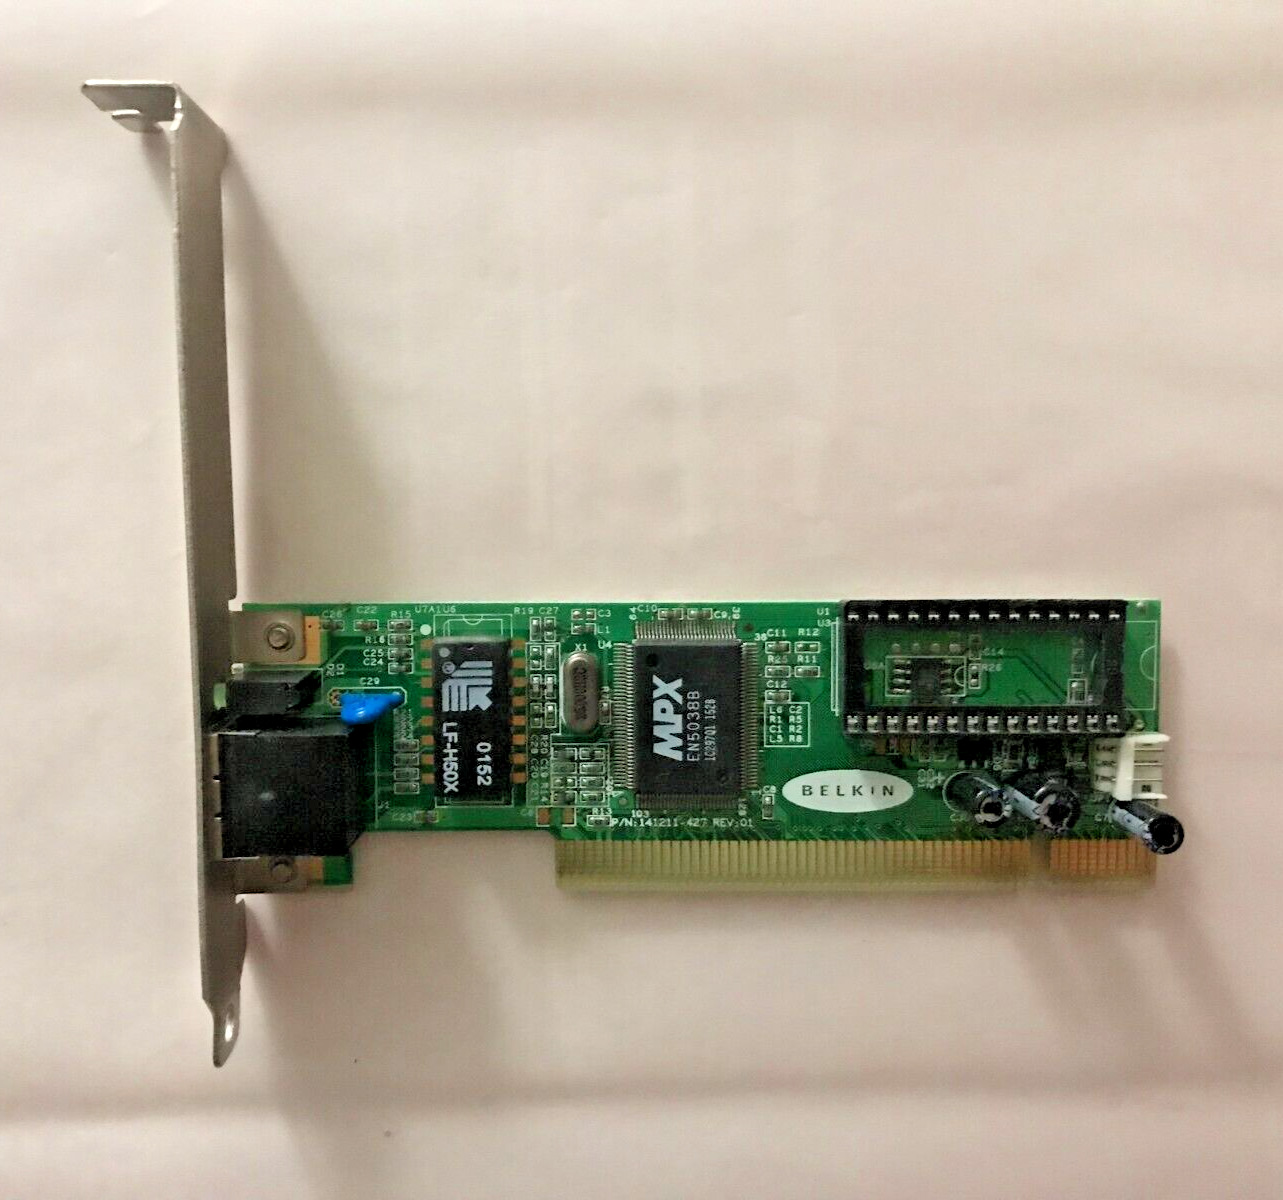 Belkin F5D5000 PCI Network Card with 1 Ethernet RJ45 Port F300121102